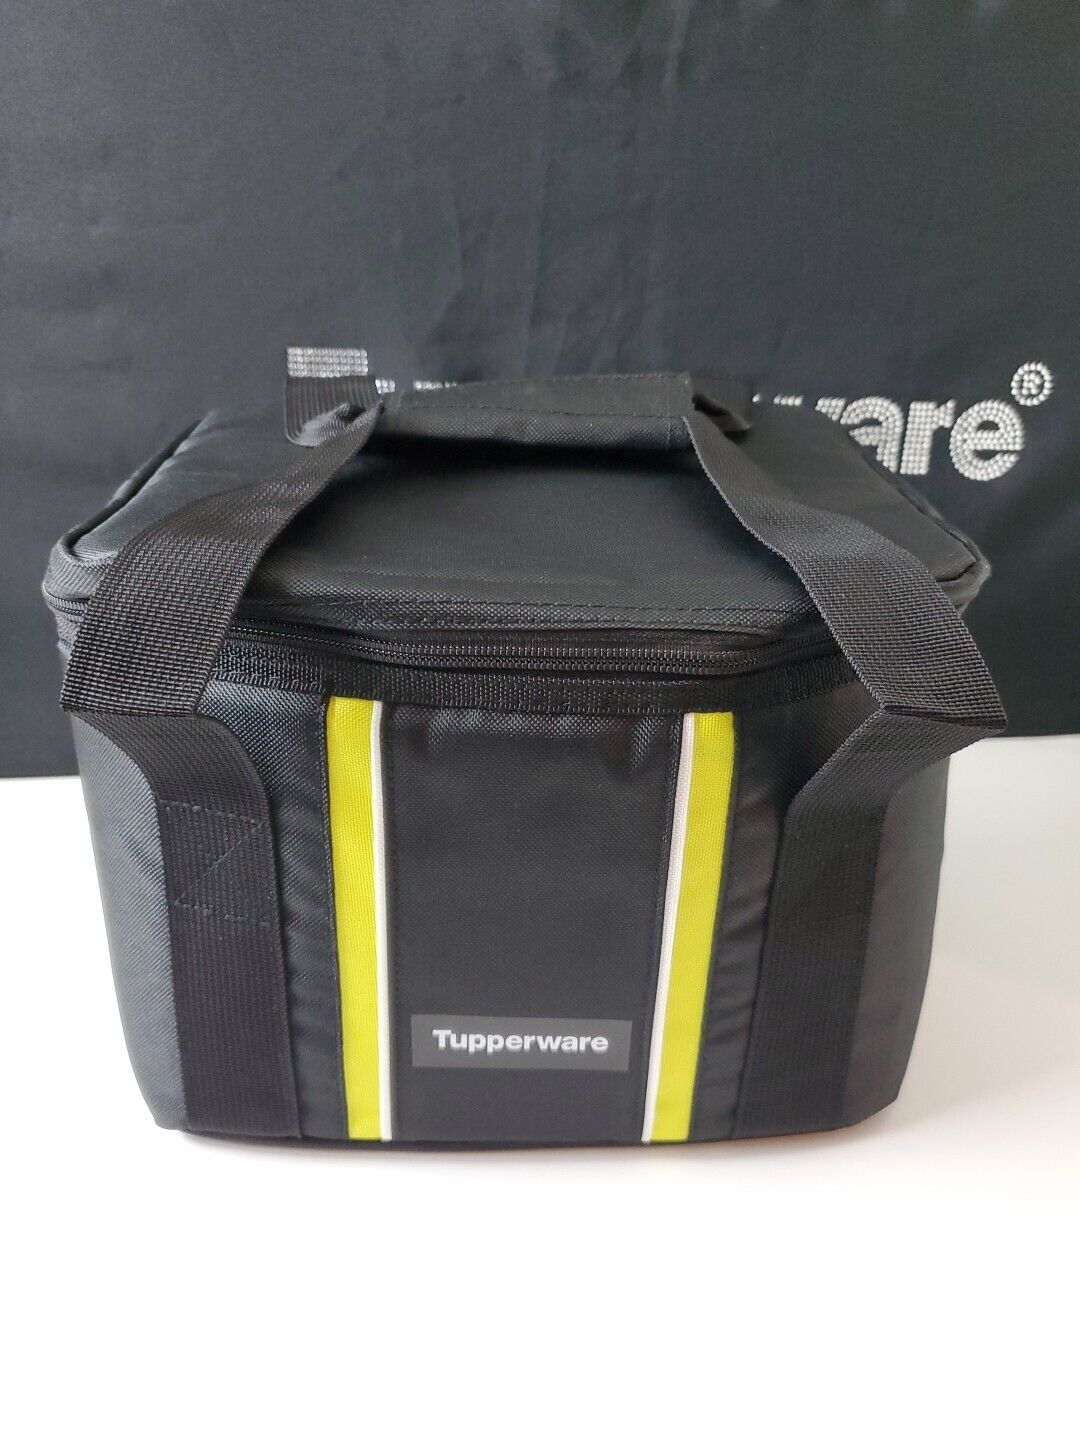 Tupperware Logo Cooler Lunch Bag Black 10x7x9 New Sale Black